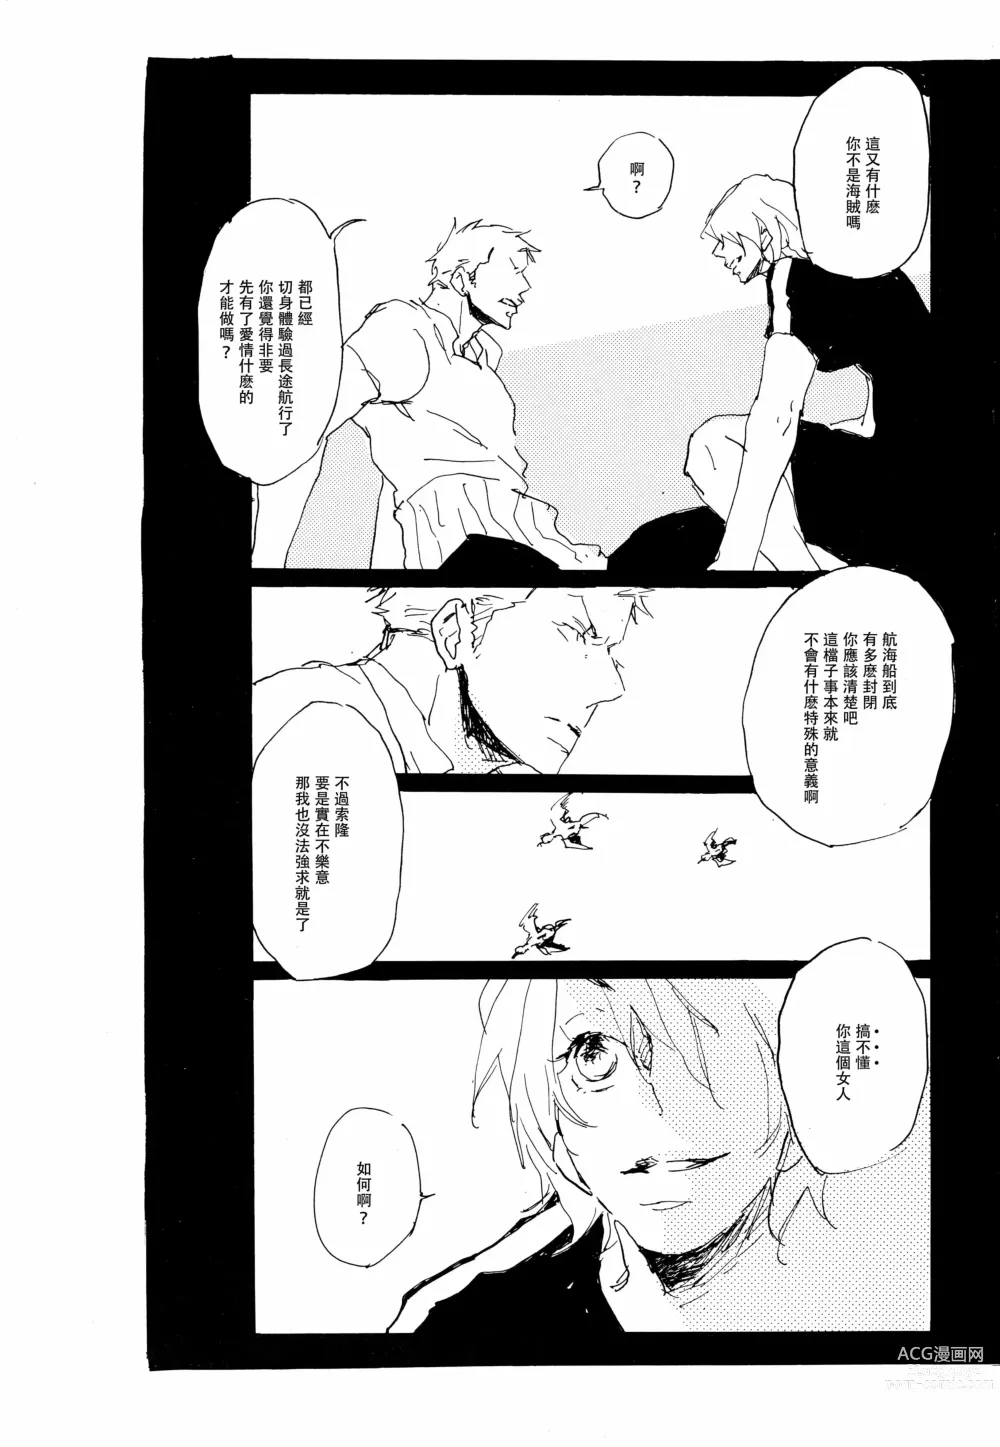 Page 18 of doujinshi 忧郁·与那份没有尽头的悲伤